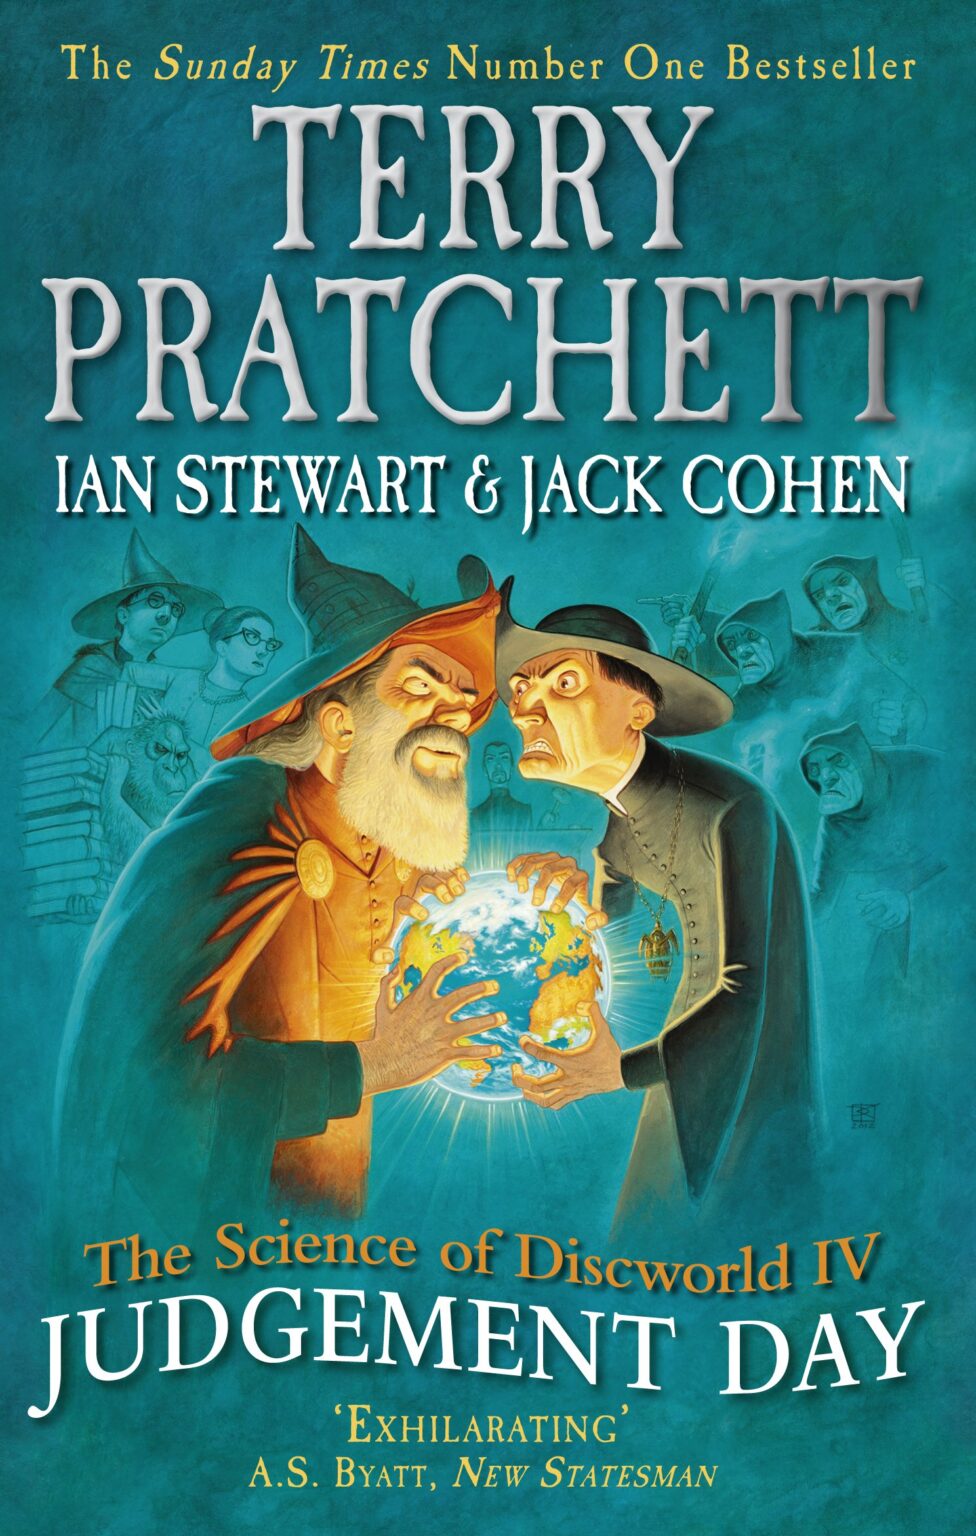 download terry pratchett most famous books